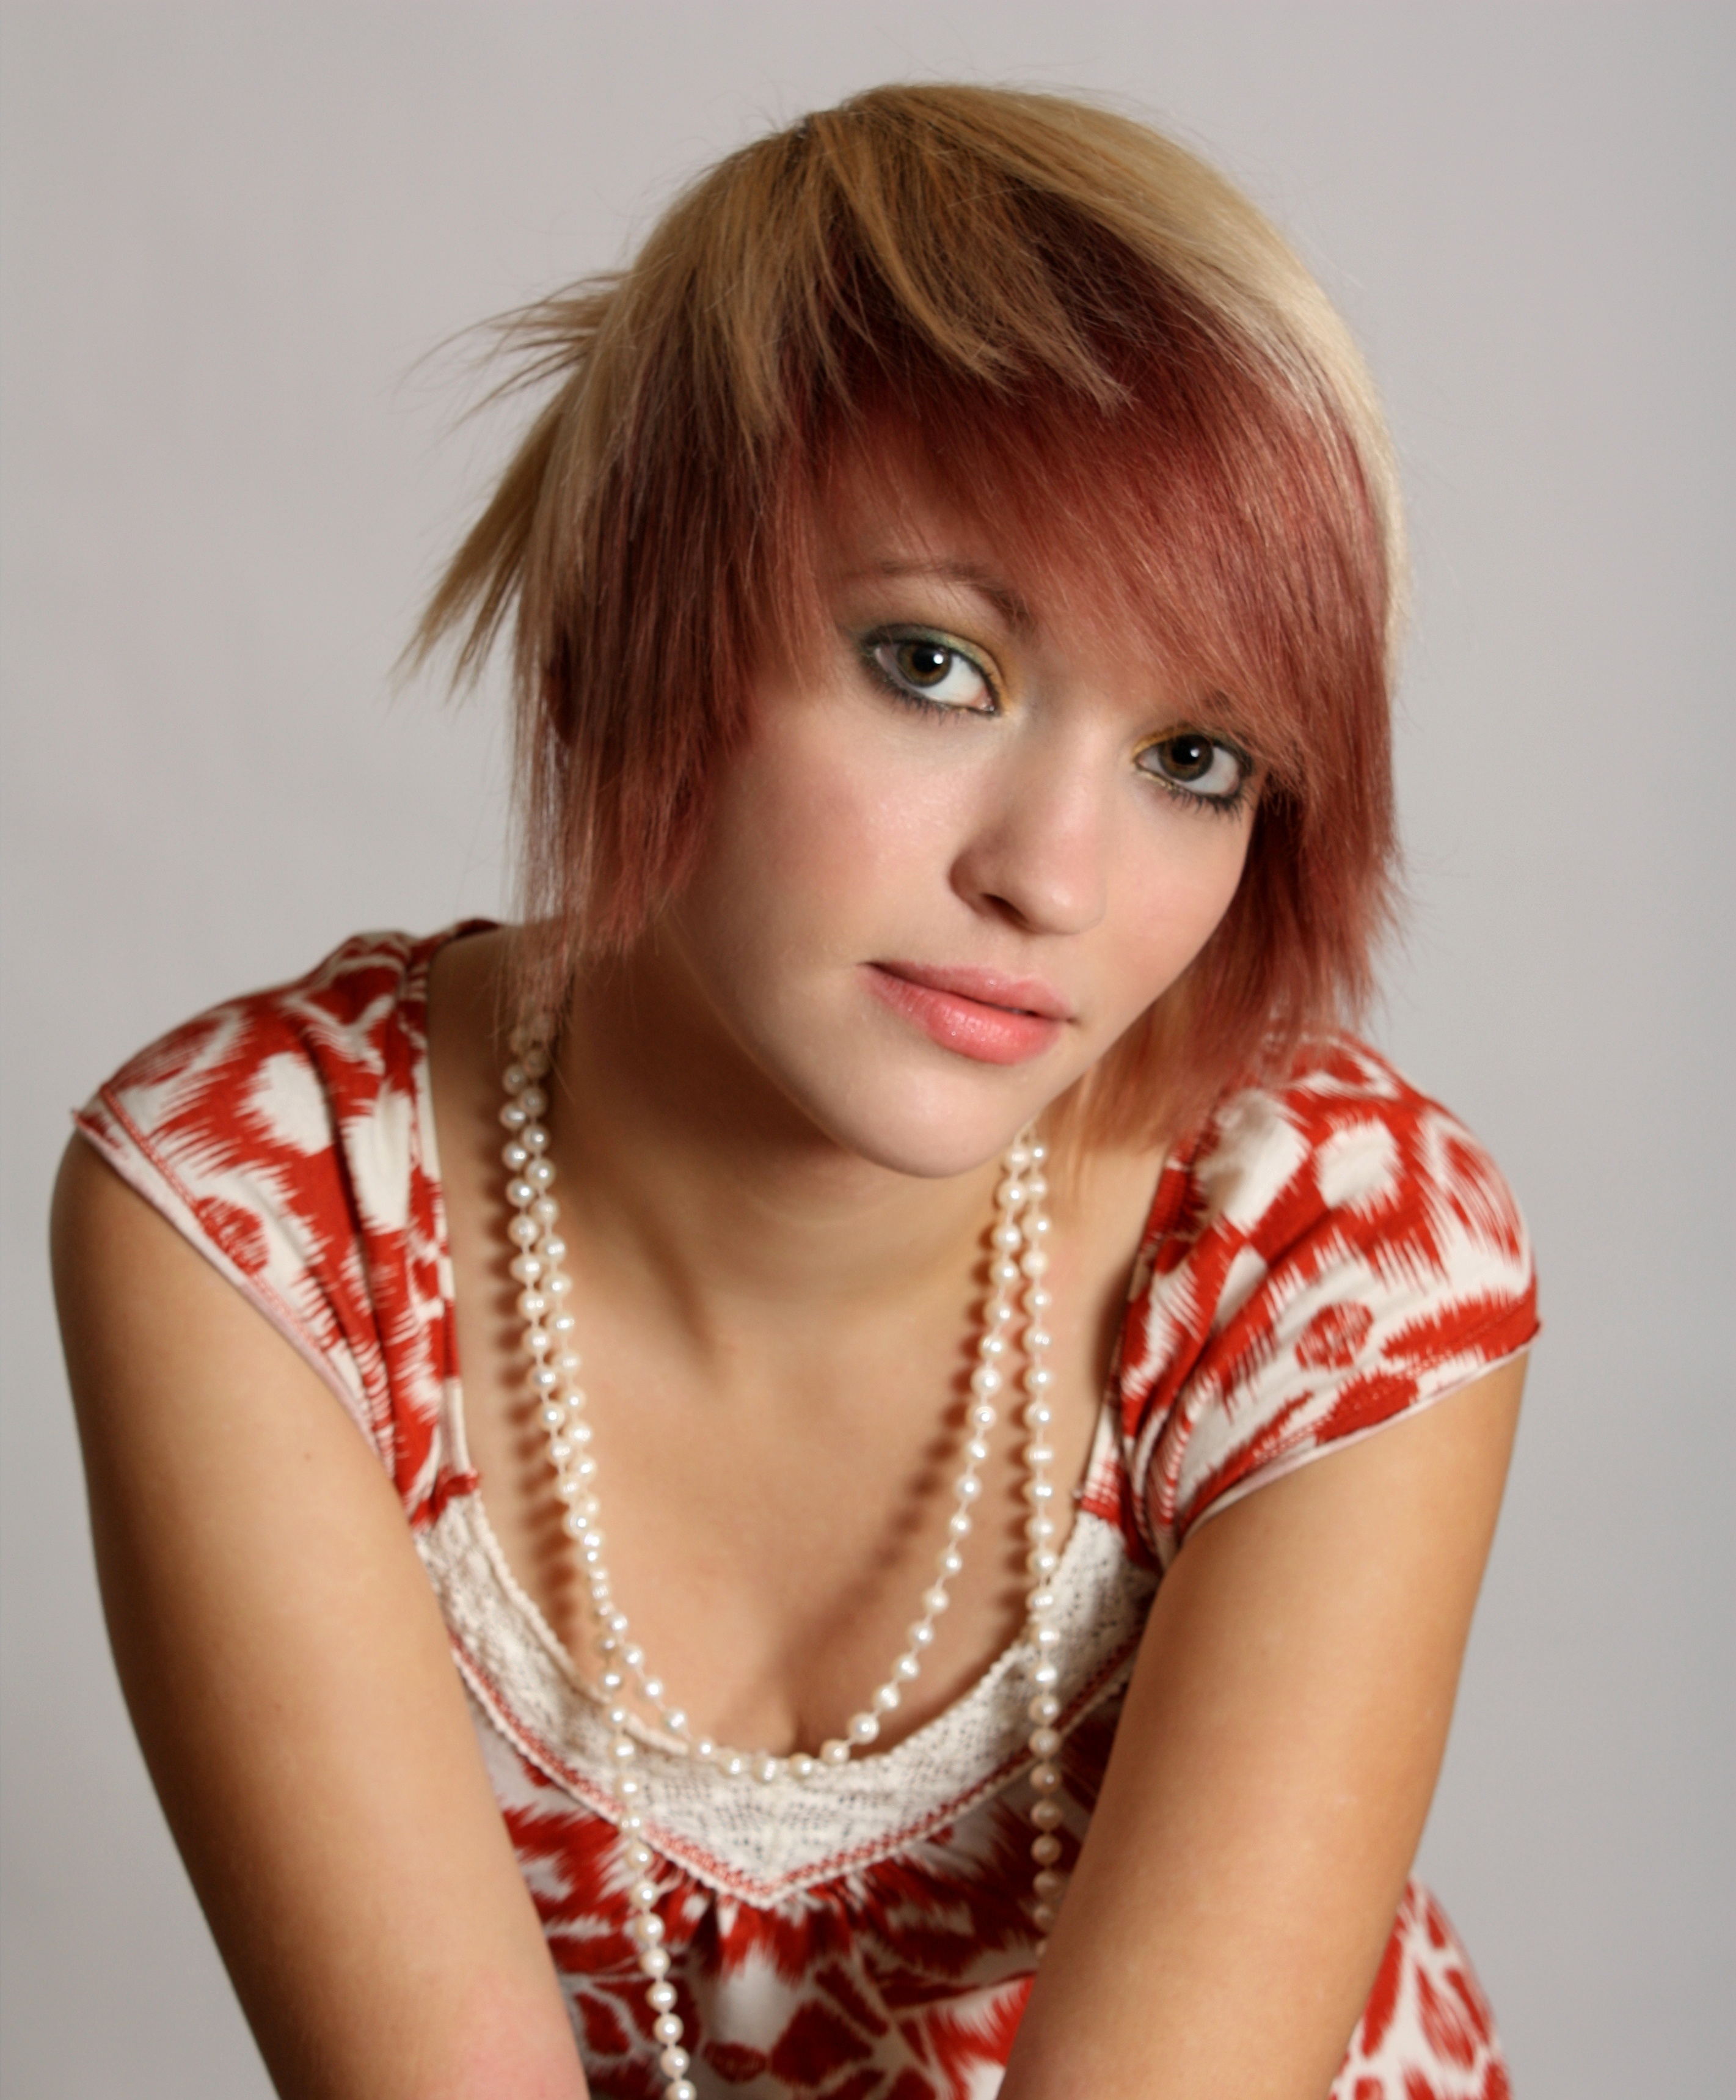 A beautiful young woman wearing pearls photo